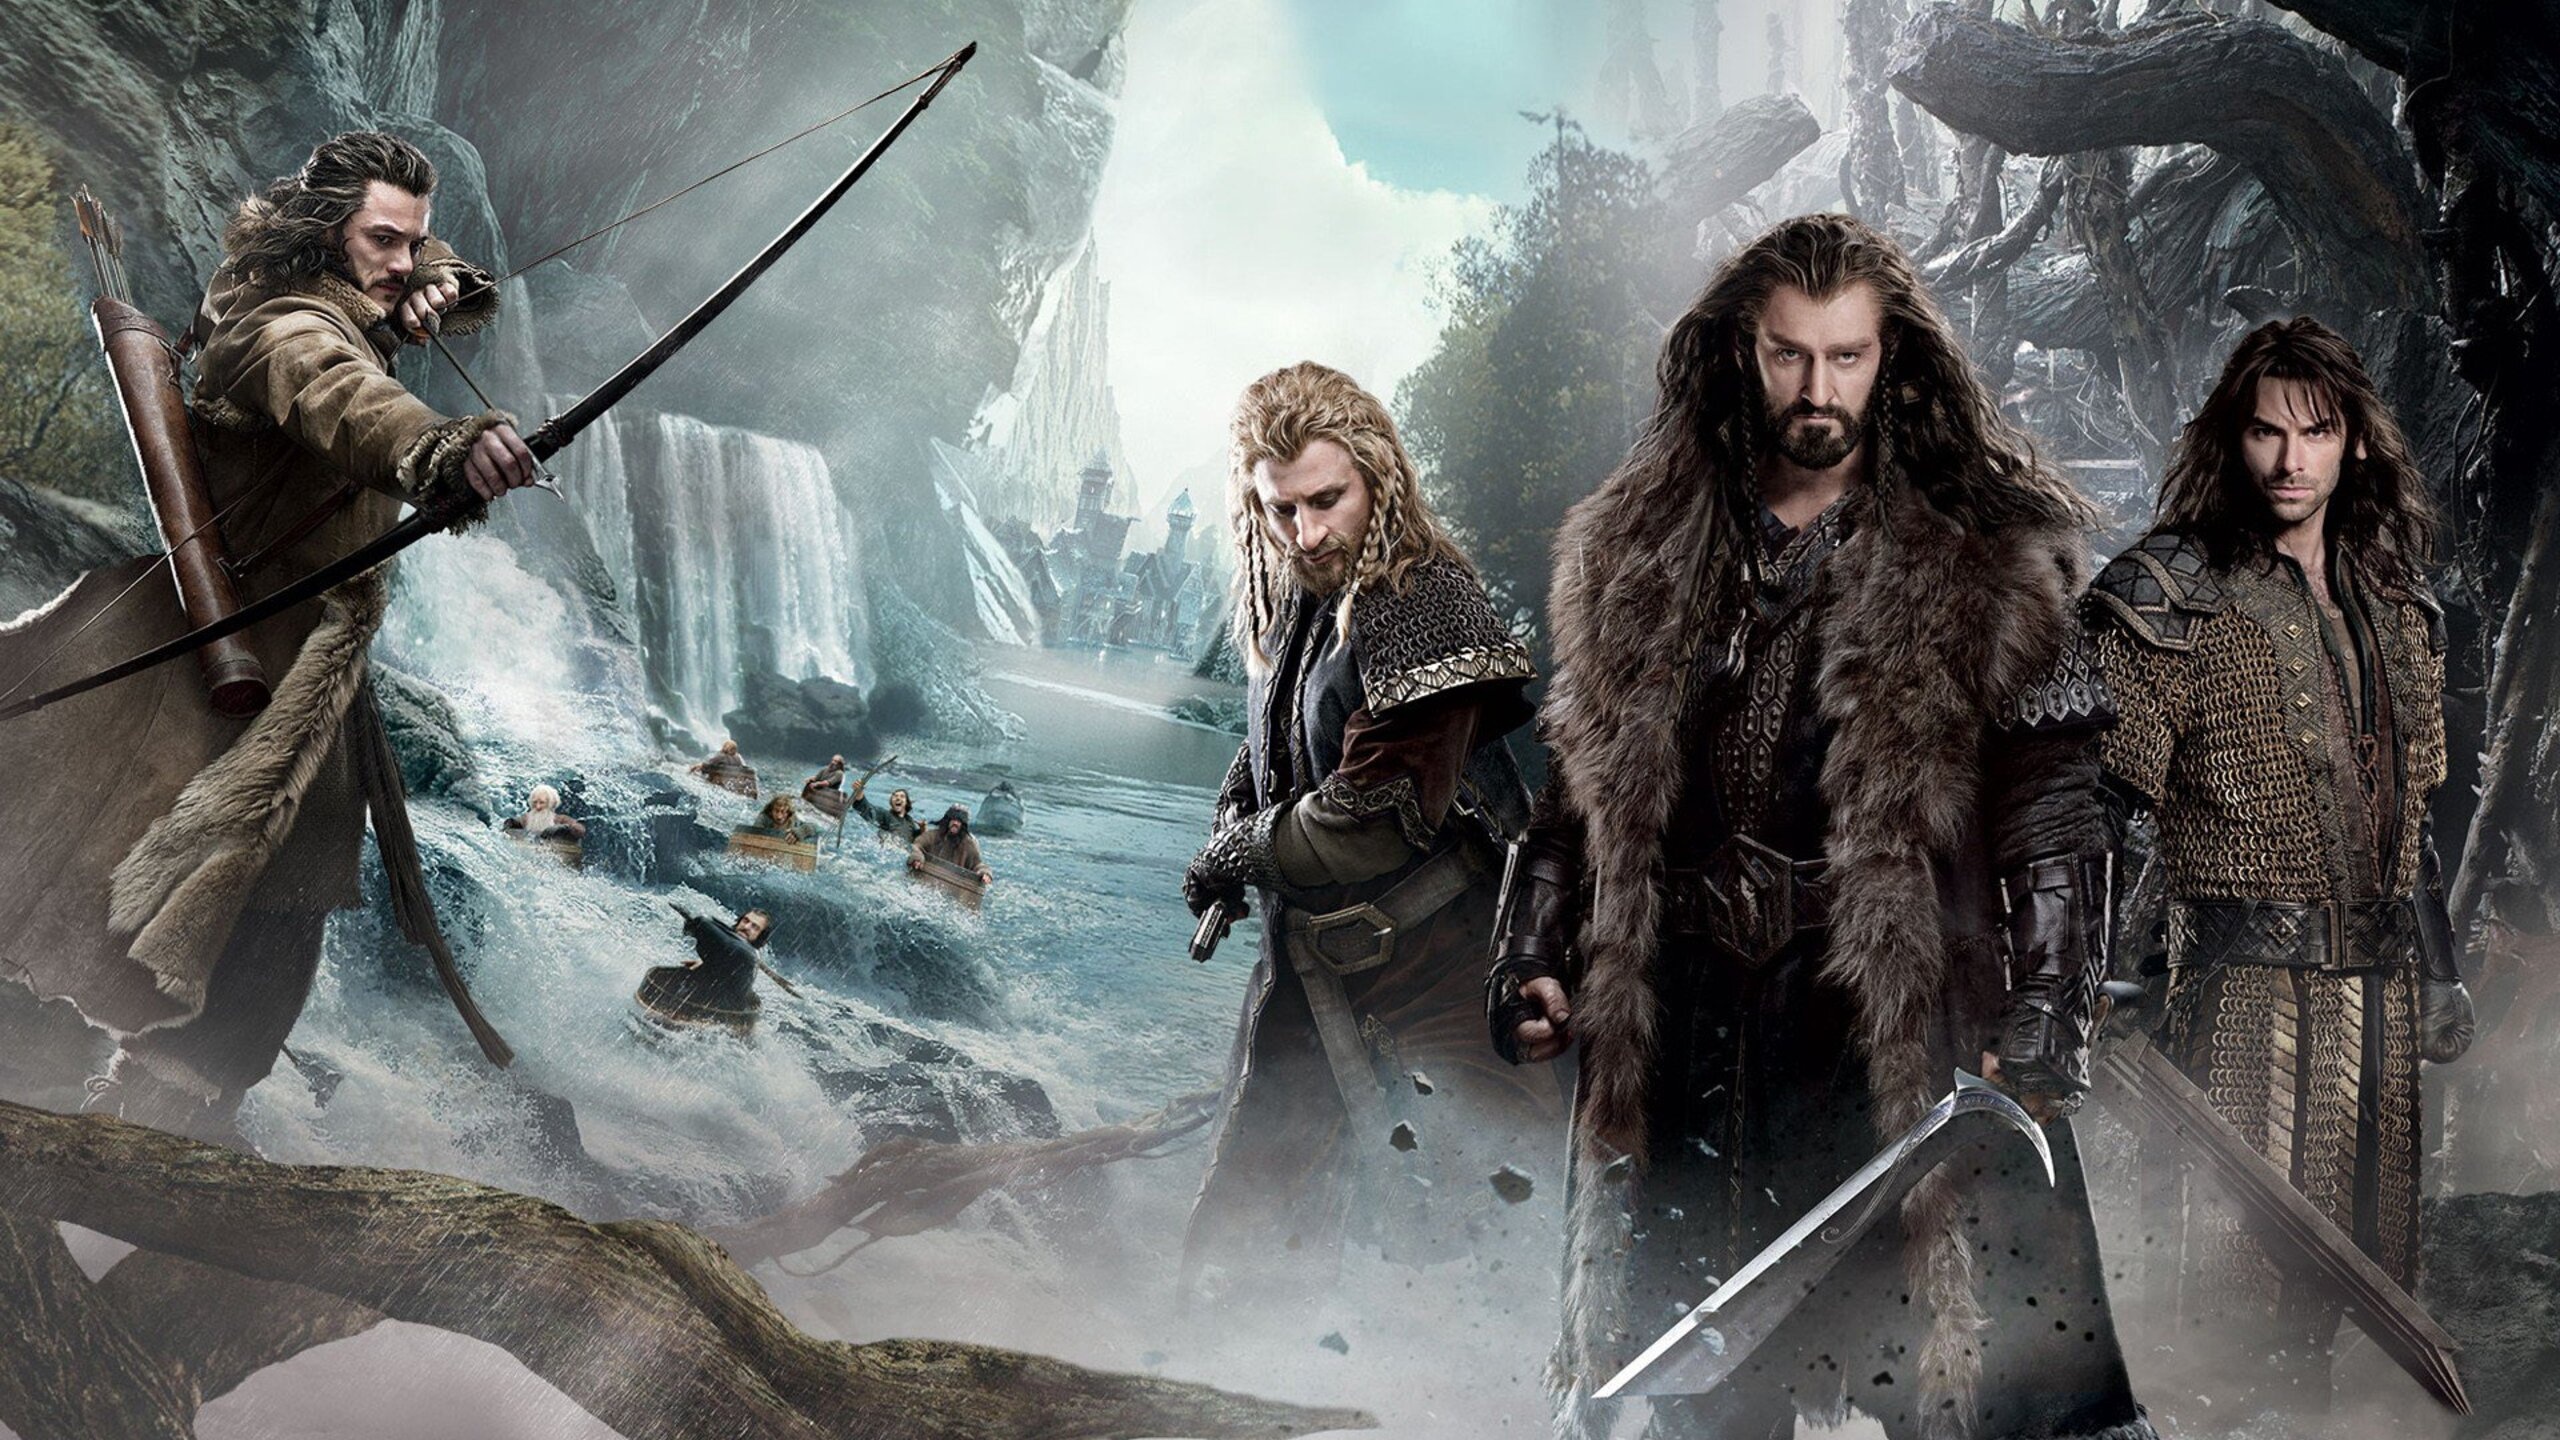 The Hobbit (Movie): Fili and Kili, Dwarves, Minor characters. 2560x1440 HD Wallpaper.